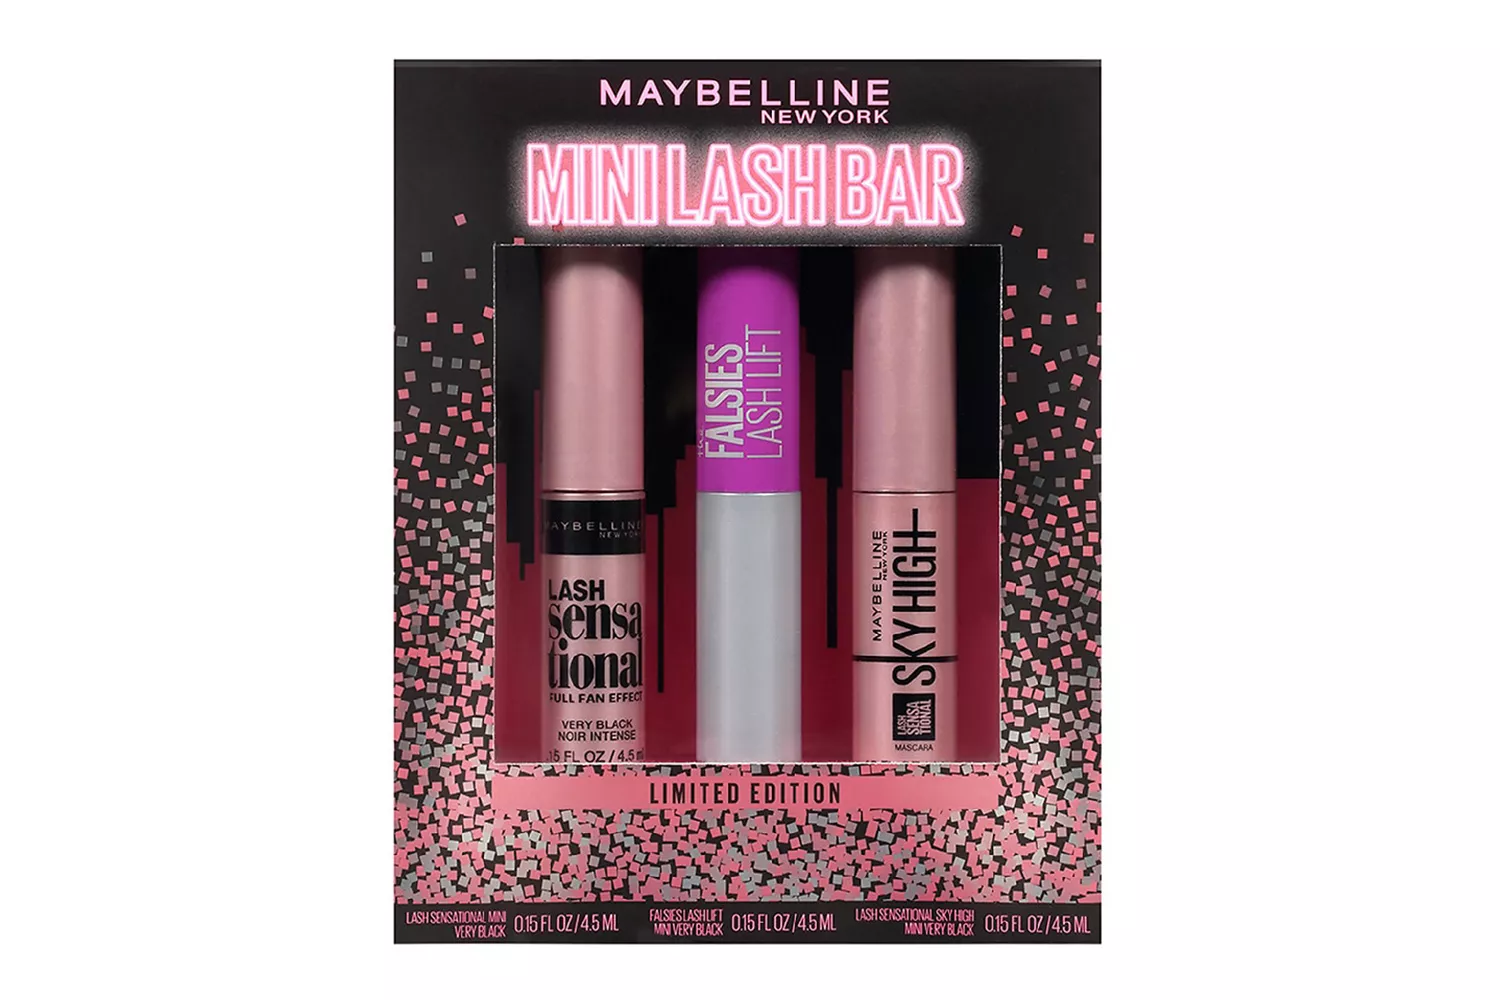 Maybelline New York Holiday Mini Lash Bar Mascara Kit